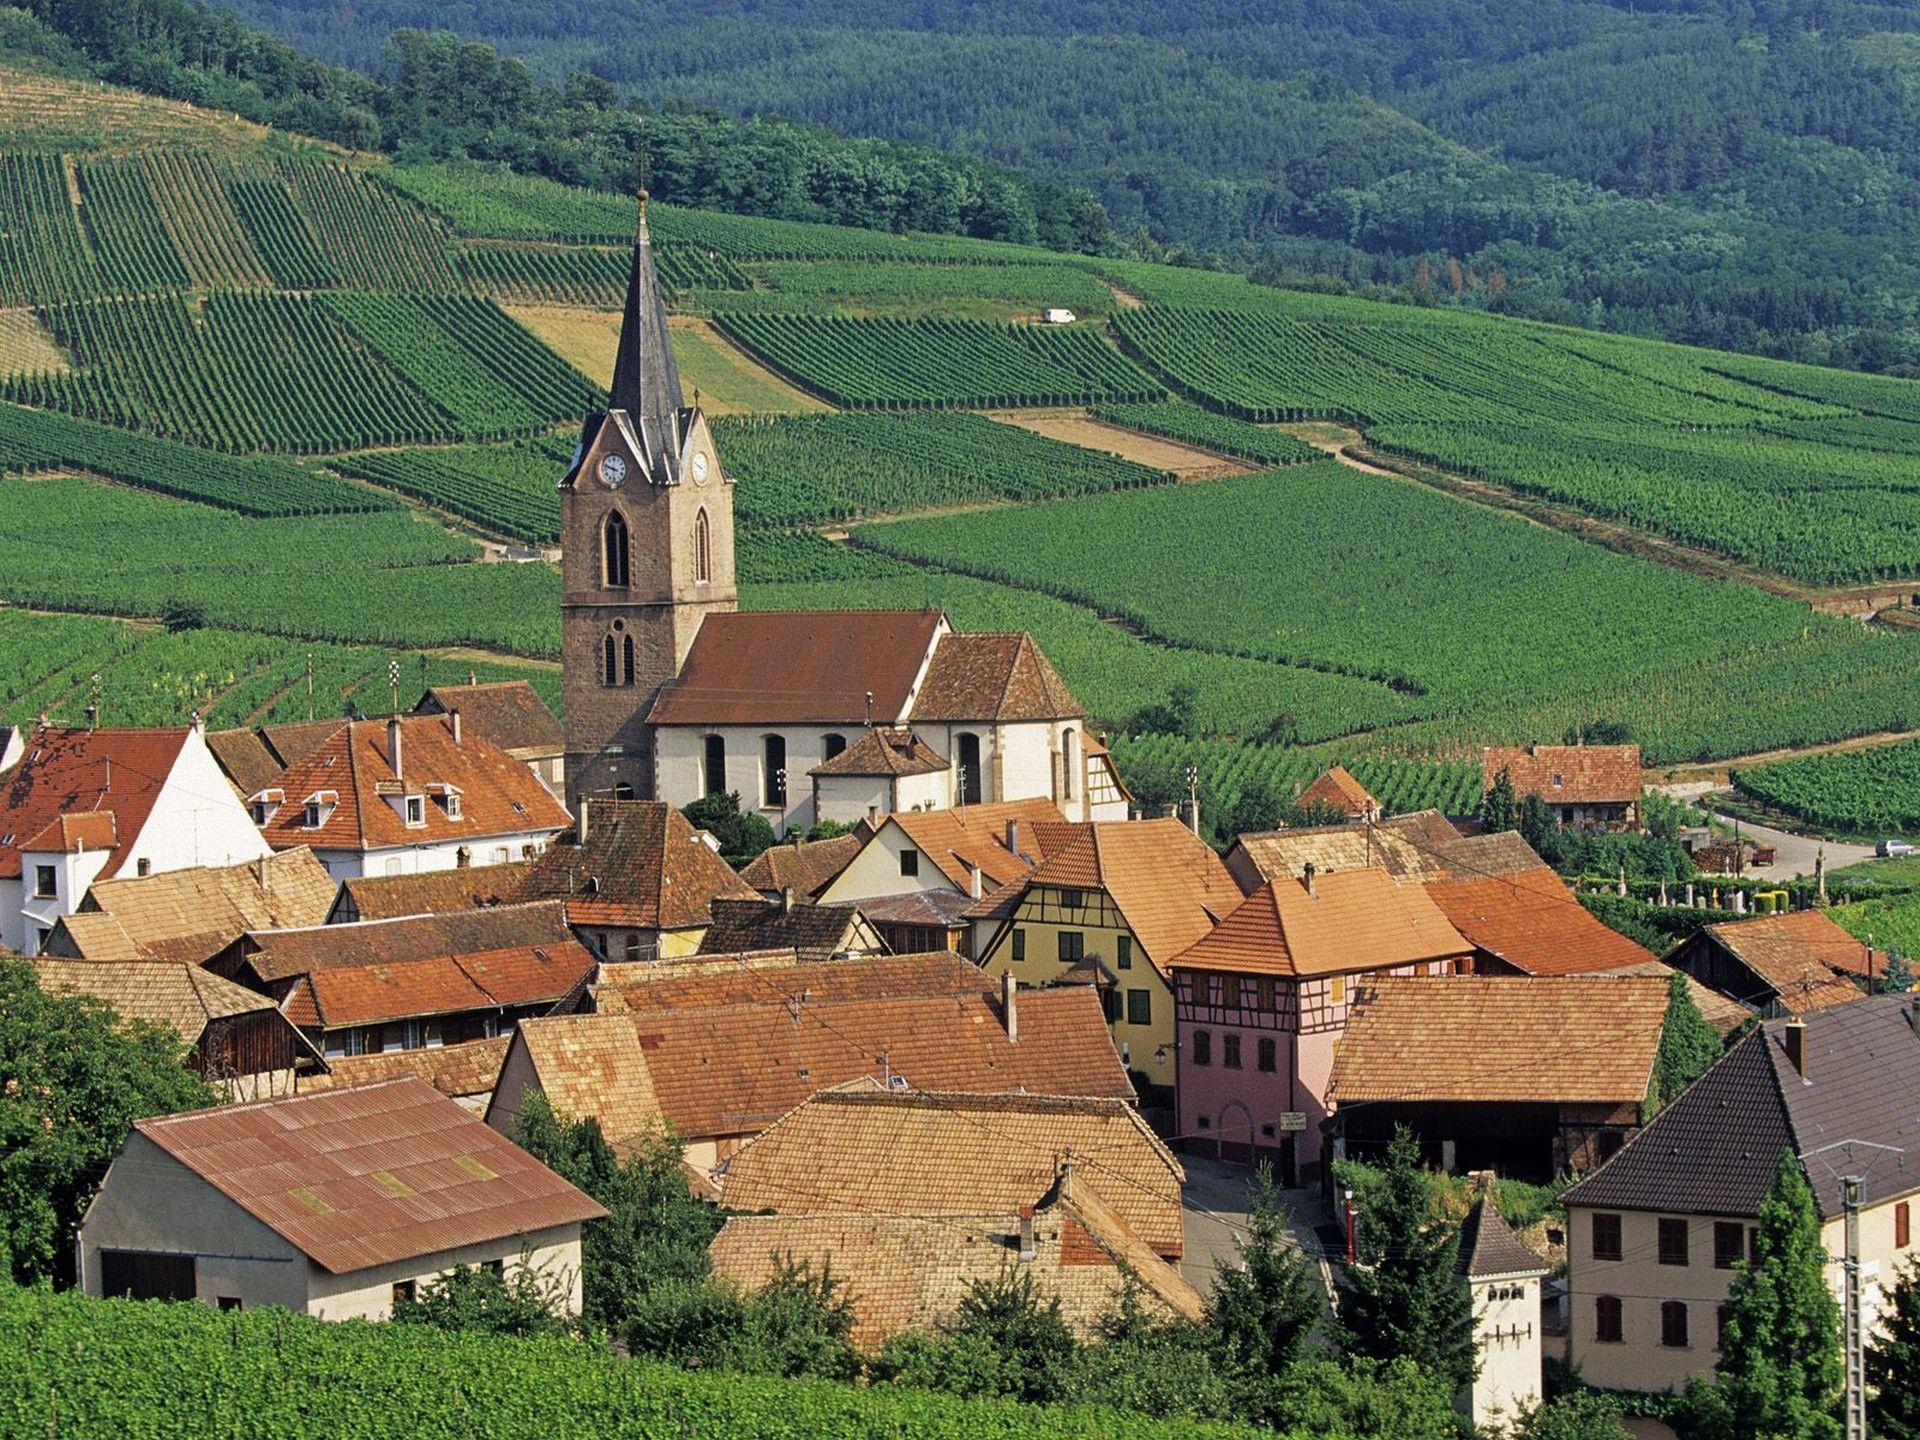 Known places: Rodern, Haut Rhin, Alsace, France, desktop